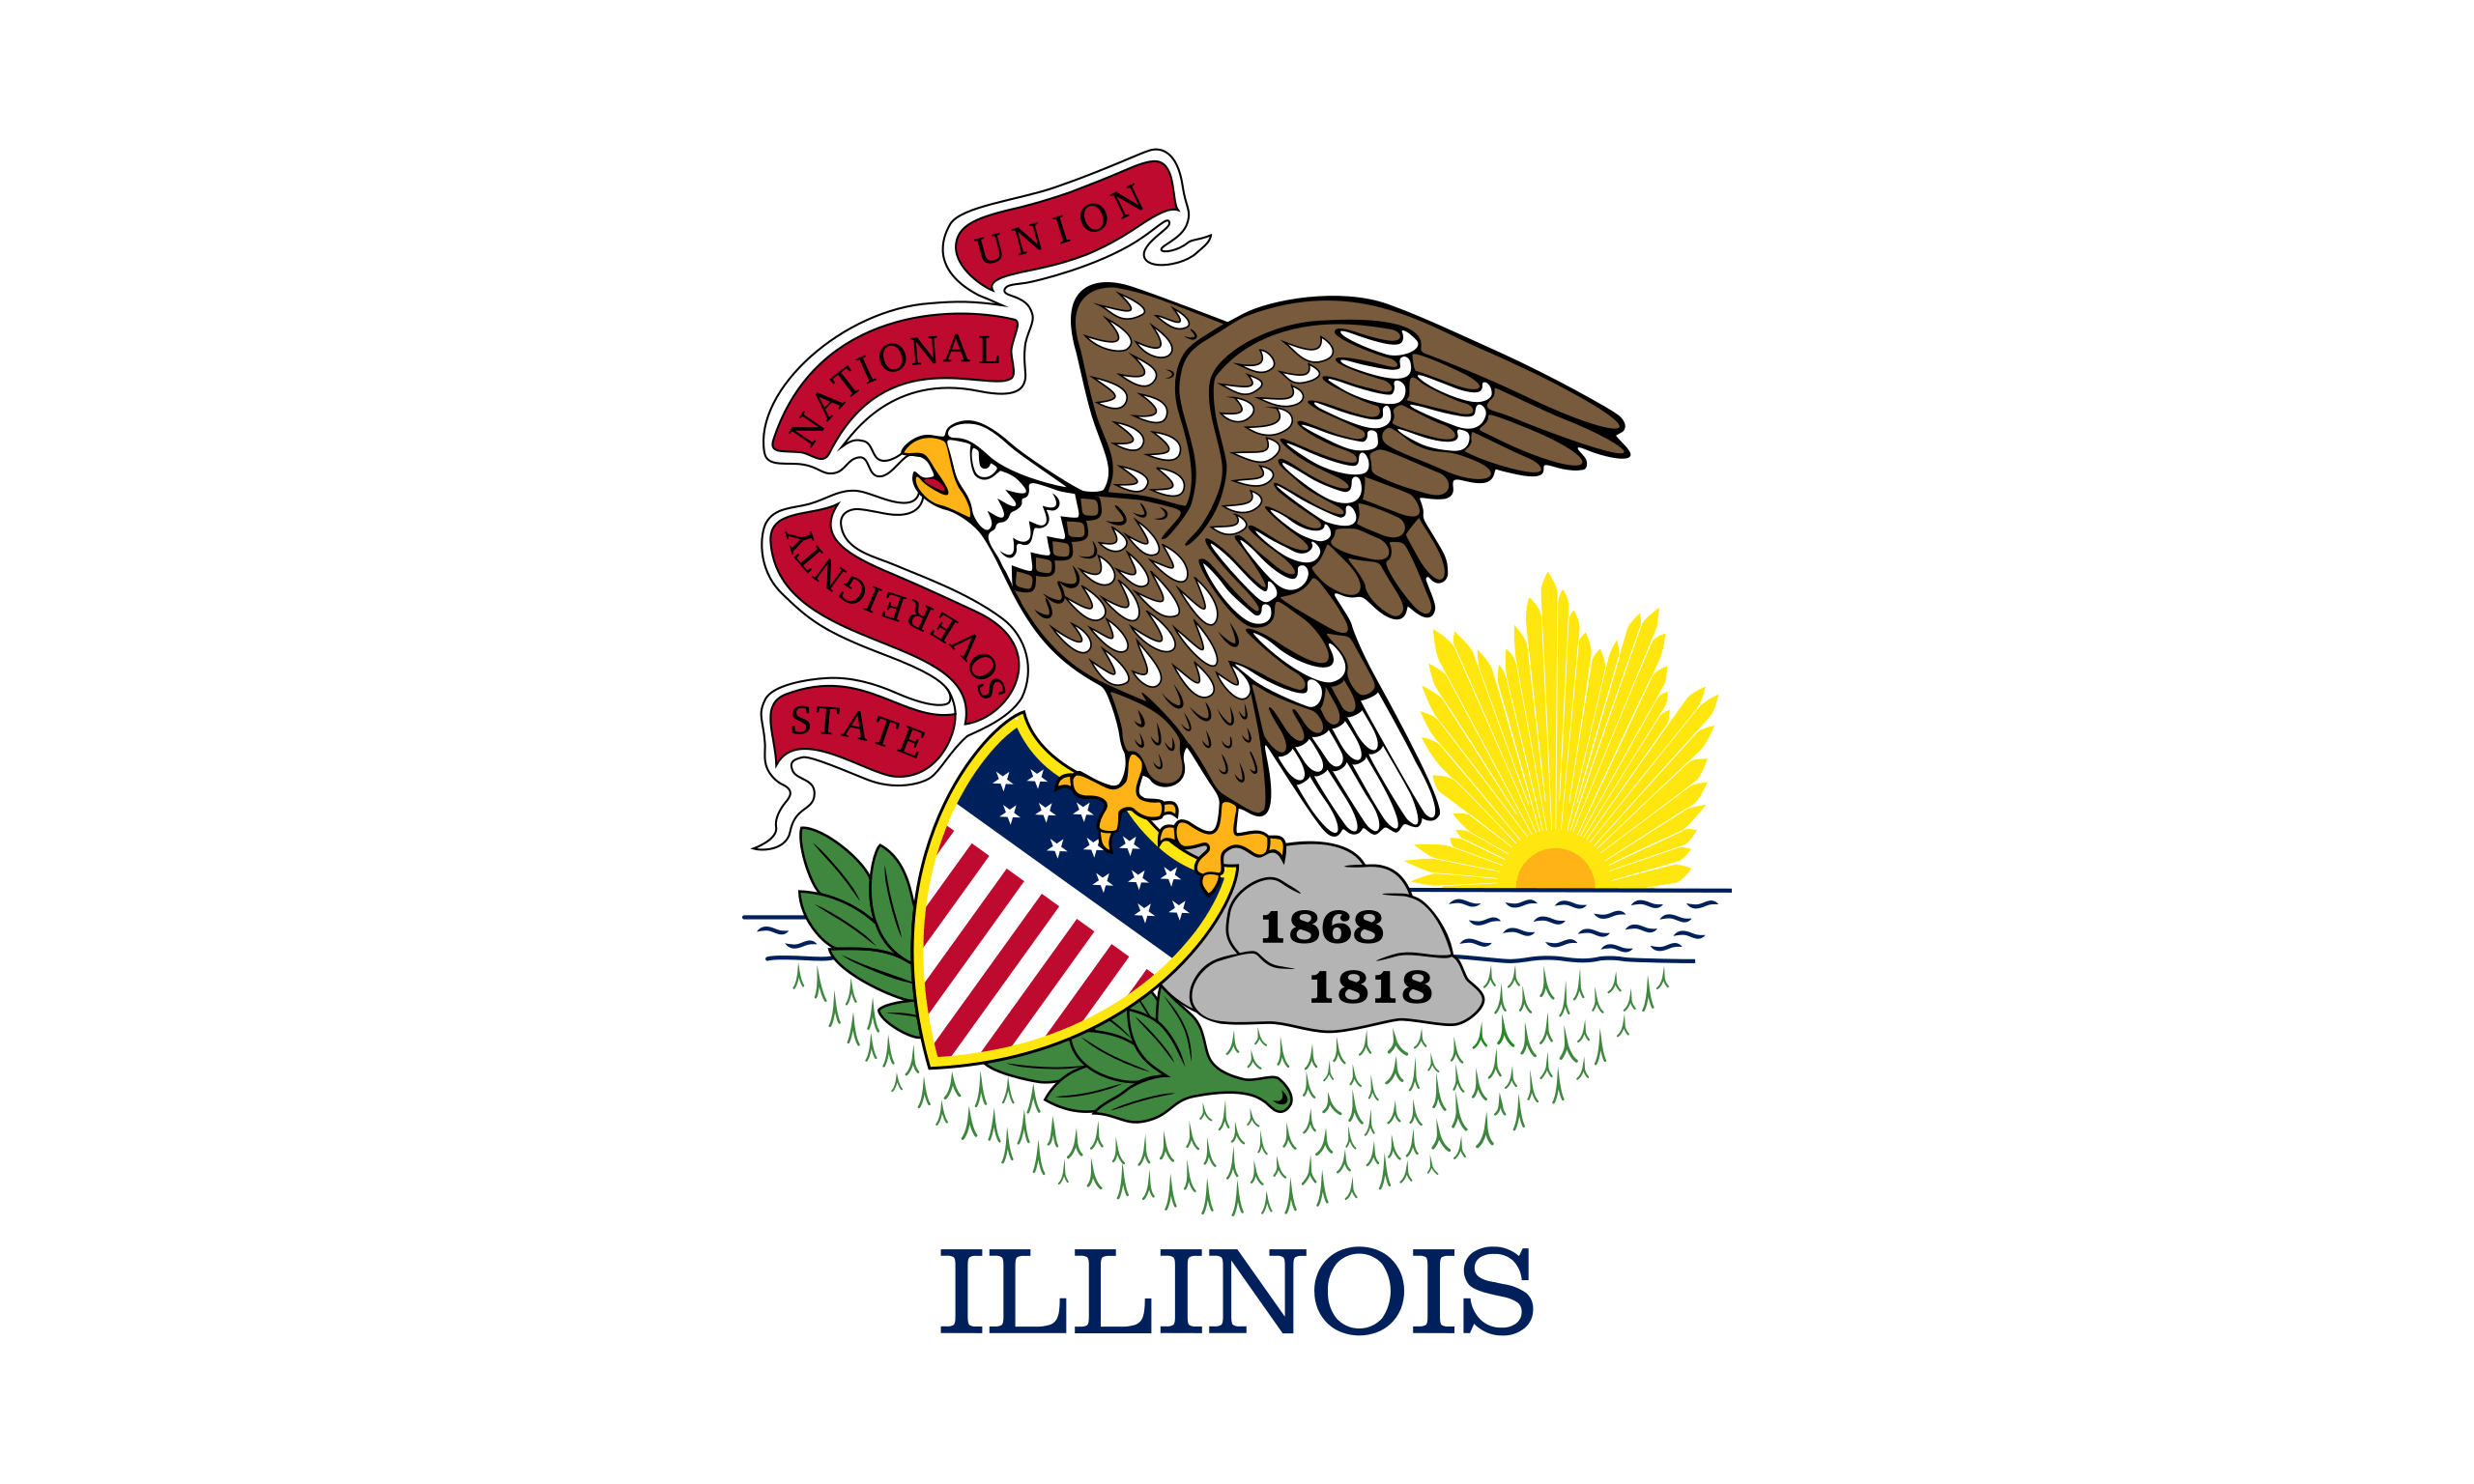 the Illinois State Flag